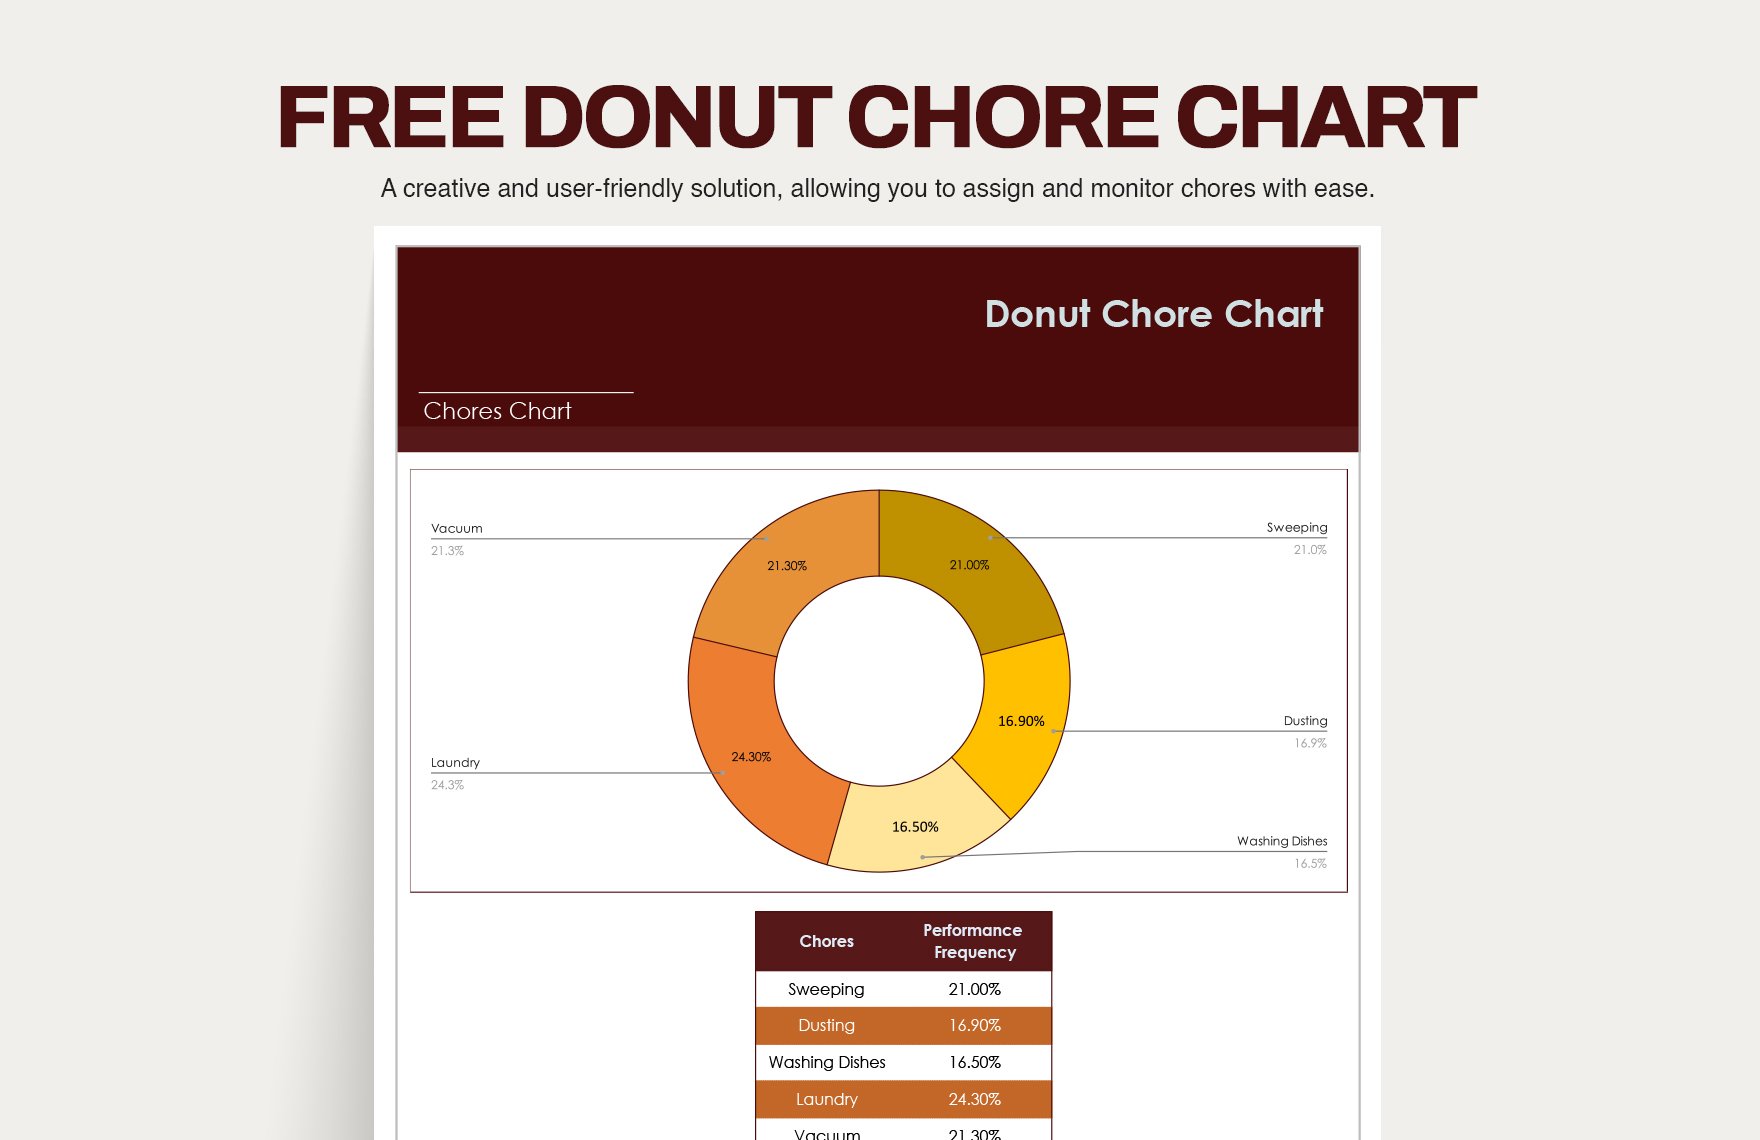 Free Donut Chore Chart